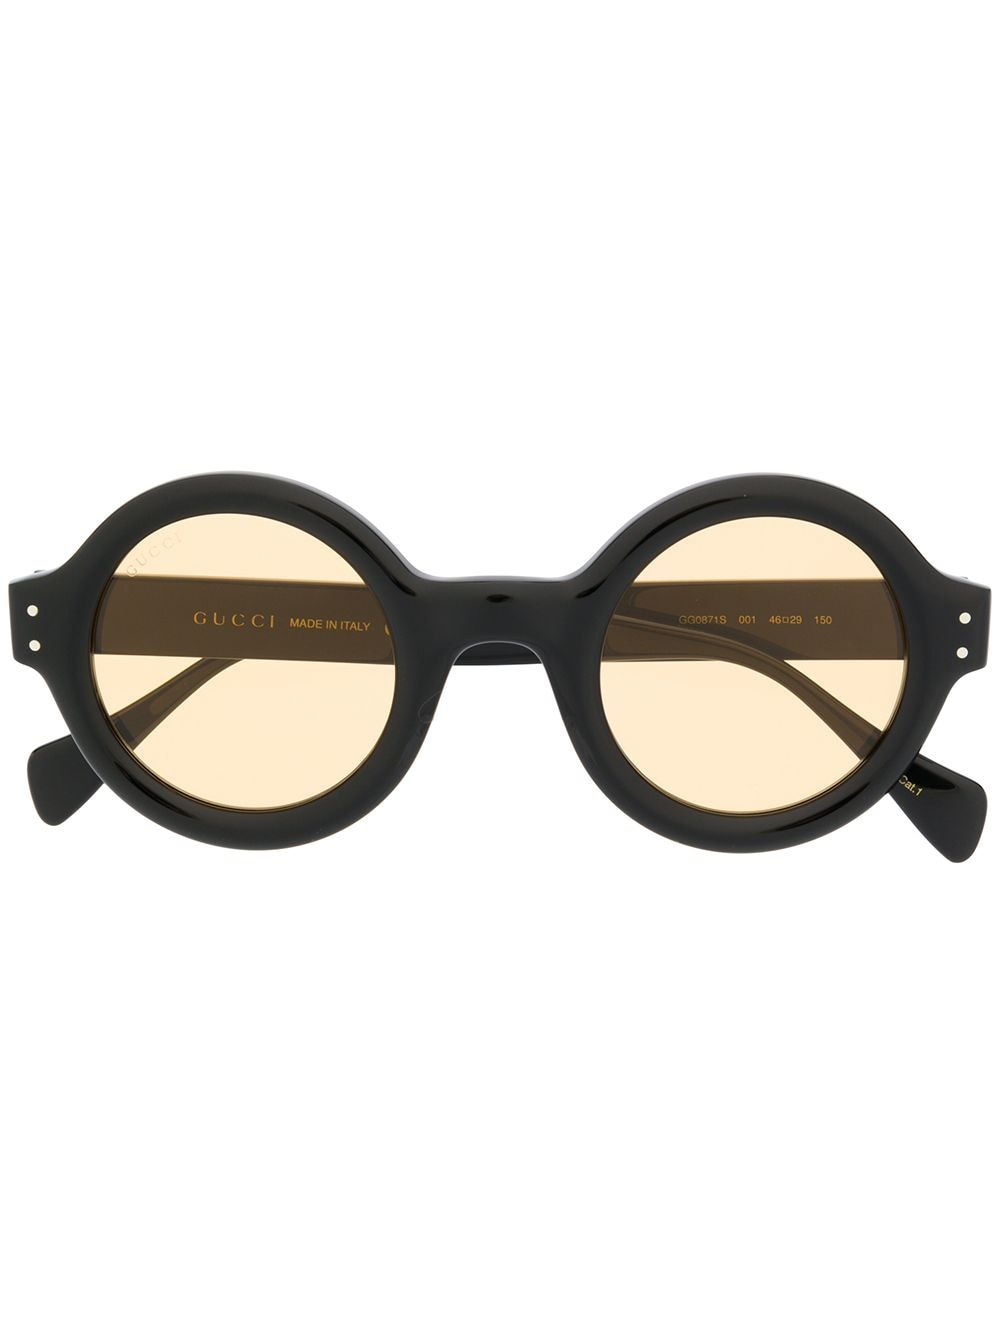 Black oversized round-frame sunglasses